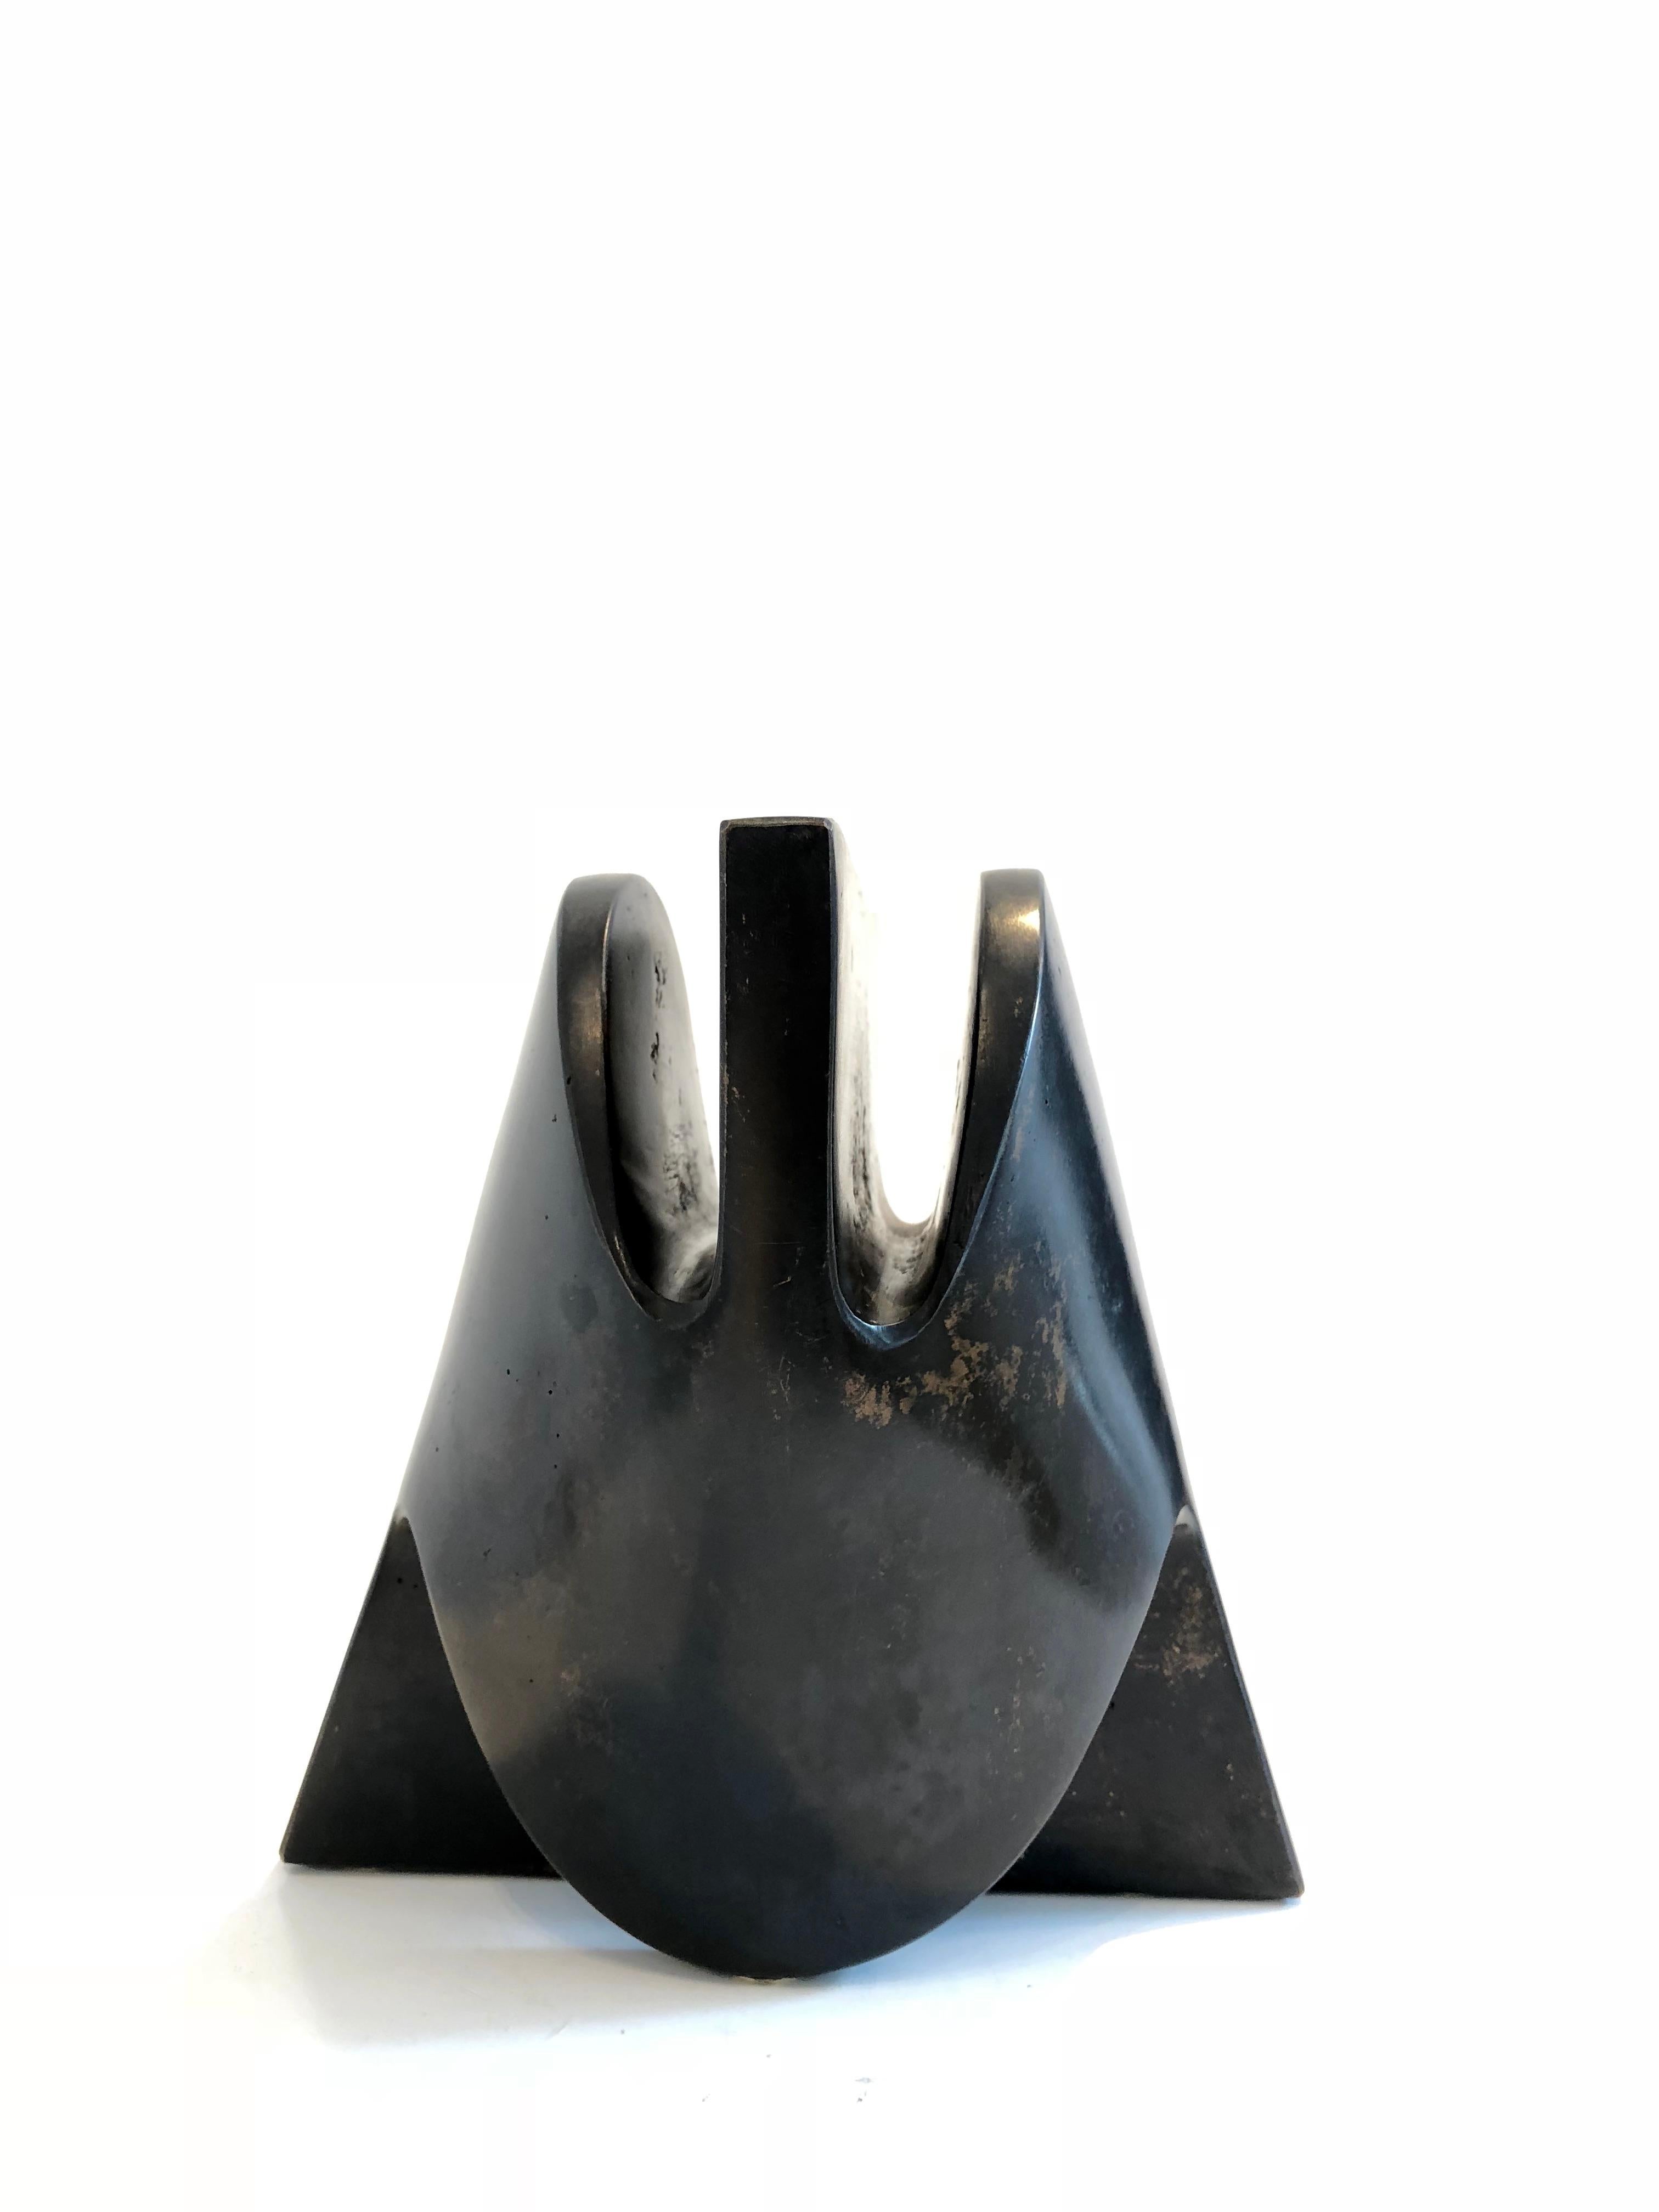 Maximilian Verhas Abstract Sculpture - Kings Head 2001, Bronze sculpture, contemporary